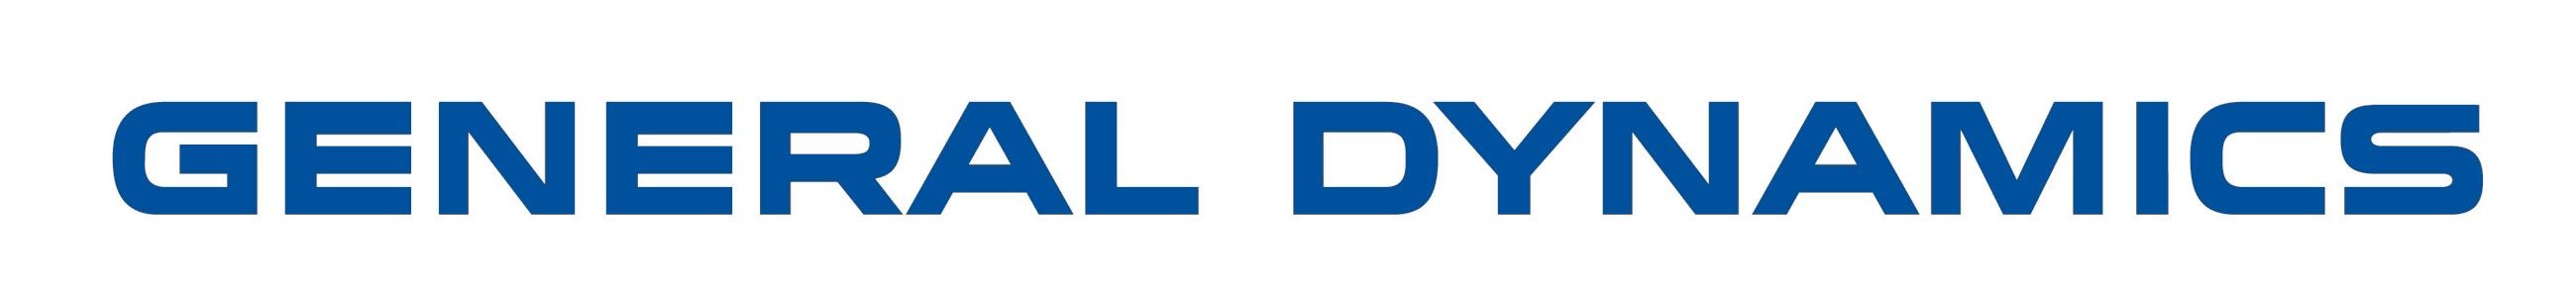 General Dynamics Brand Logo